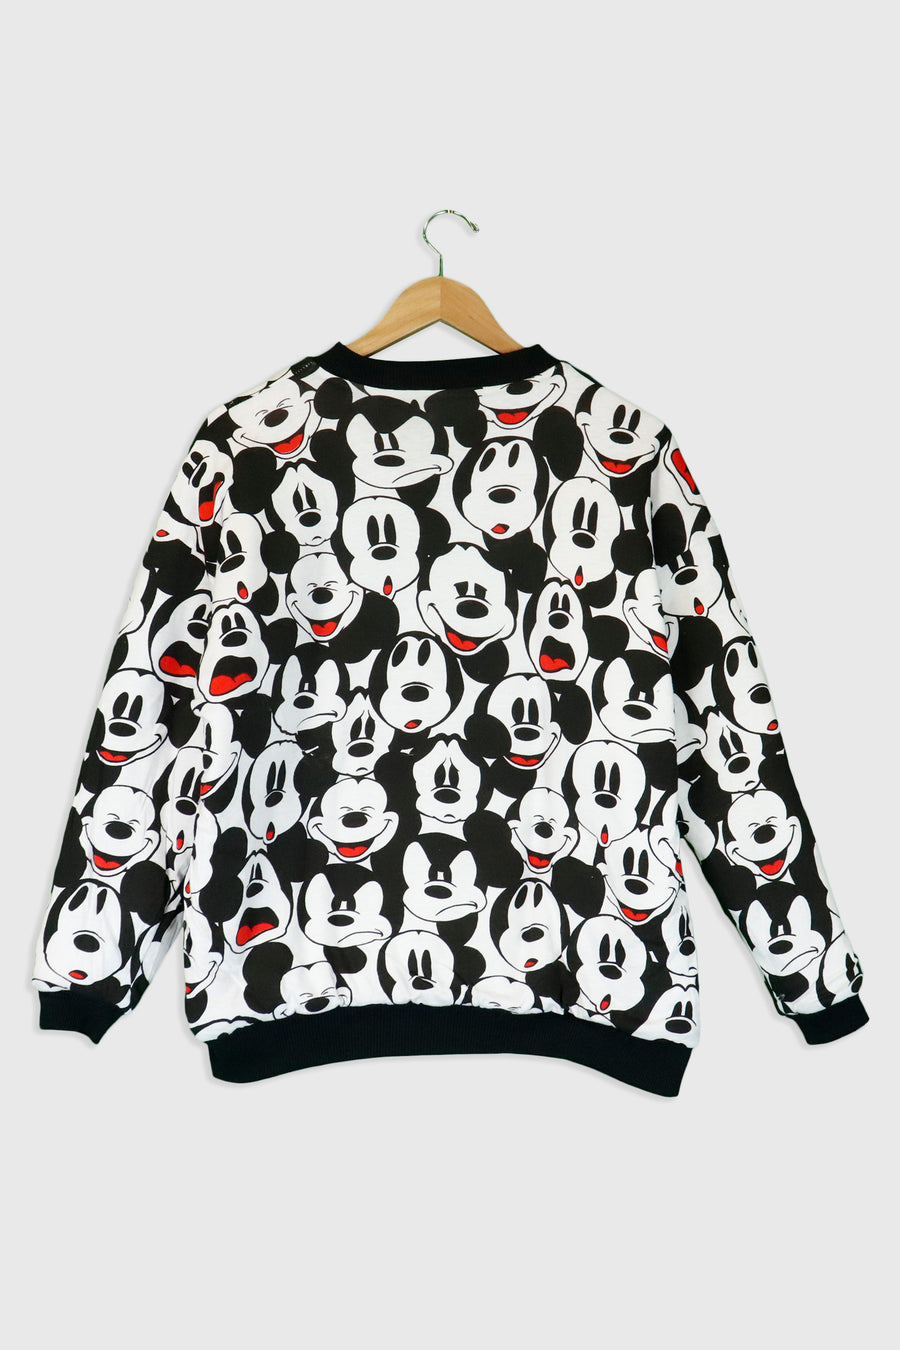 Vintage Disney Mickey Mouse Fabric Pattern Sweatshirt Sz XL